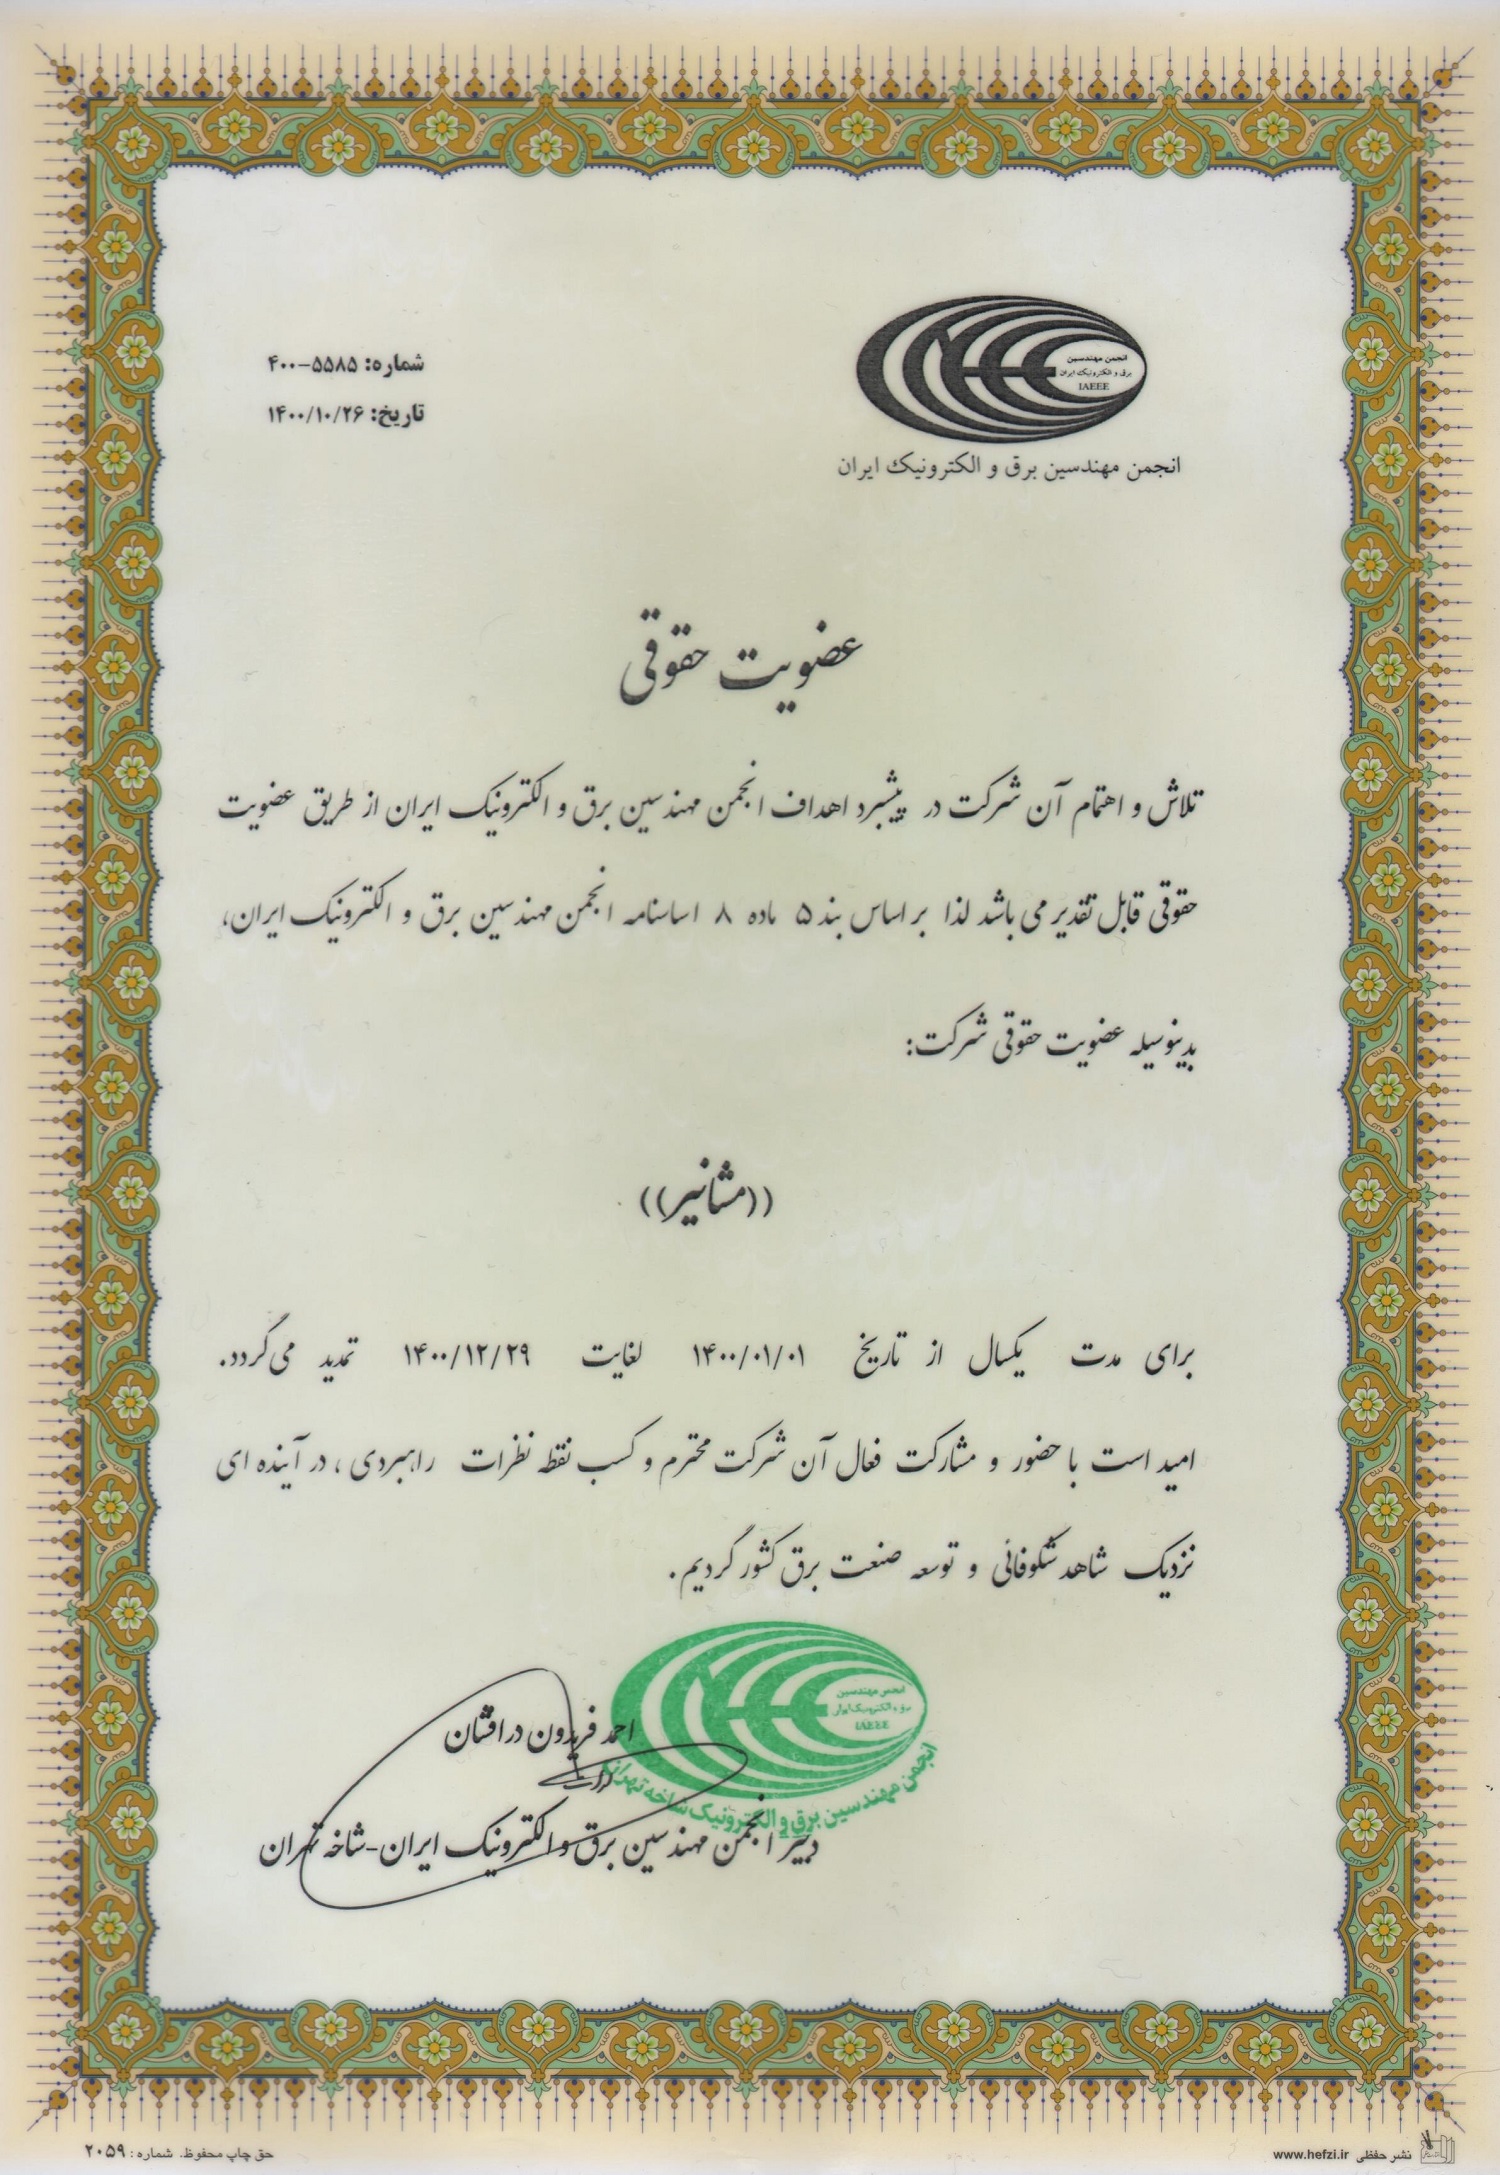  HSE-MS Certificate